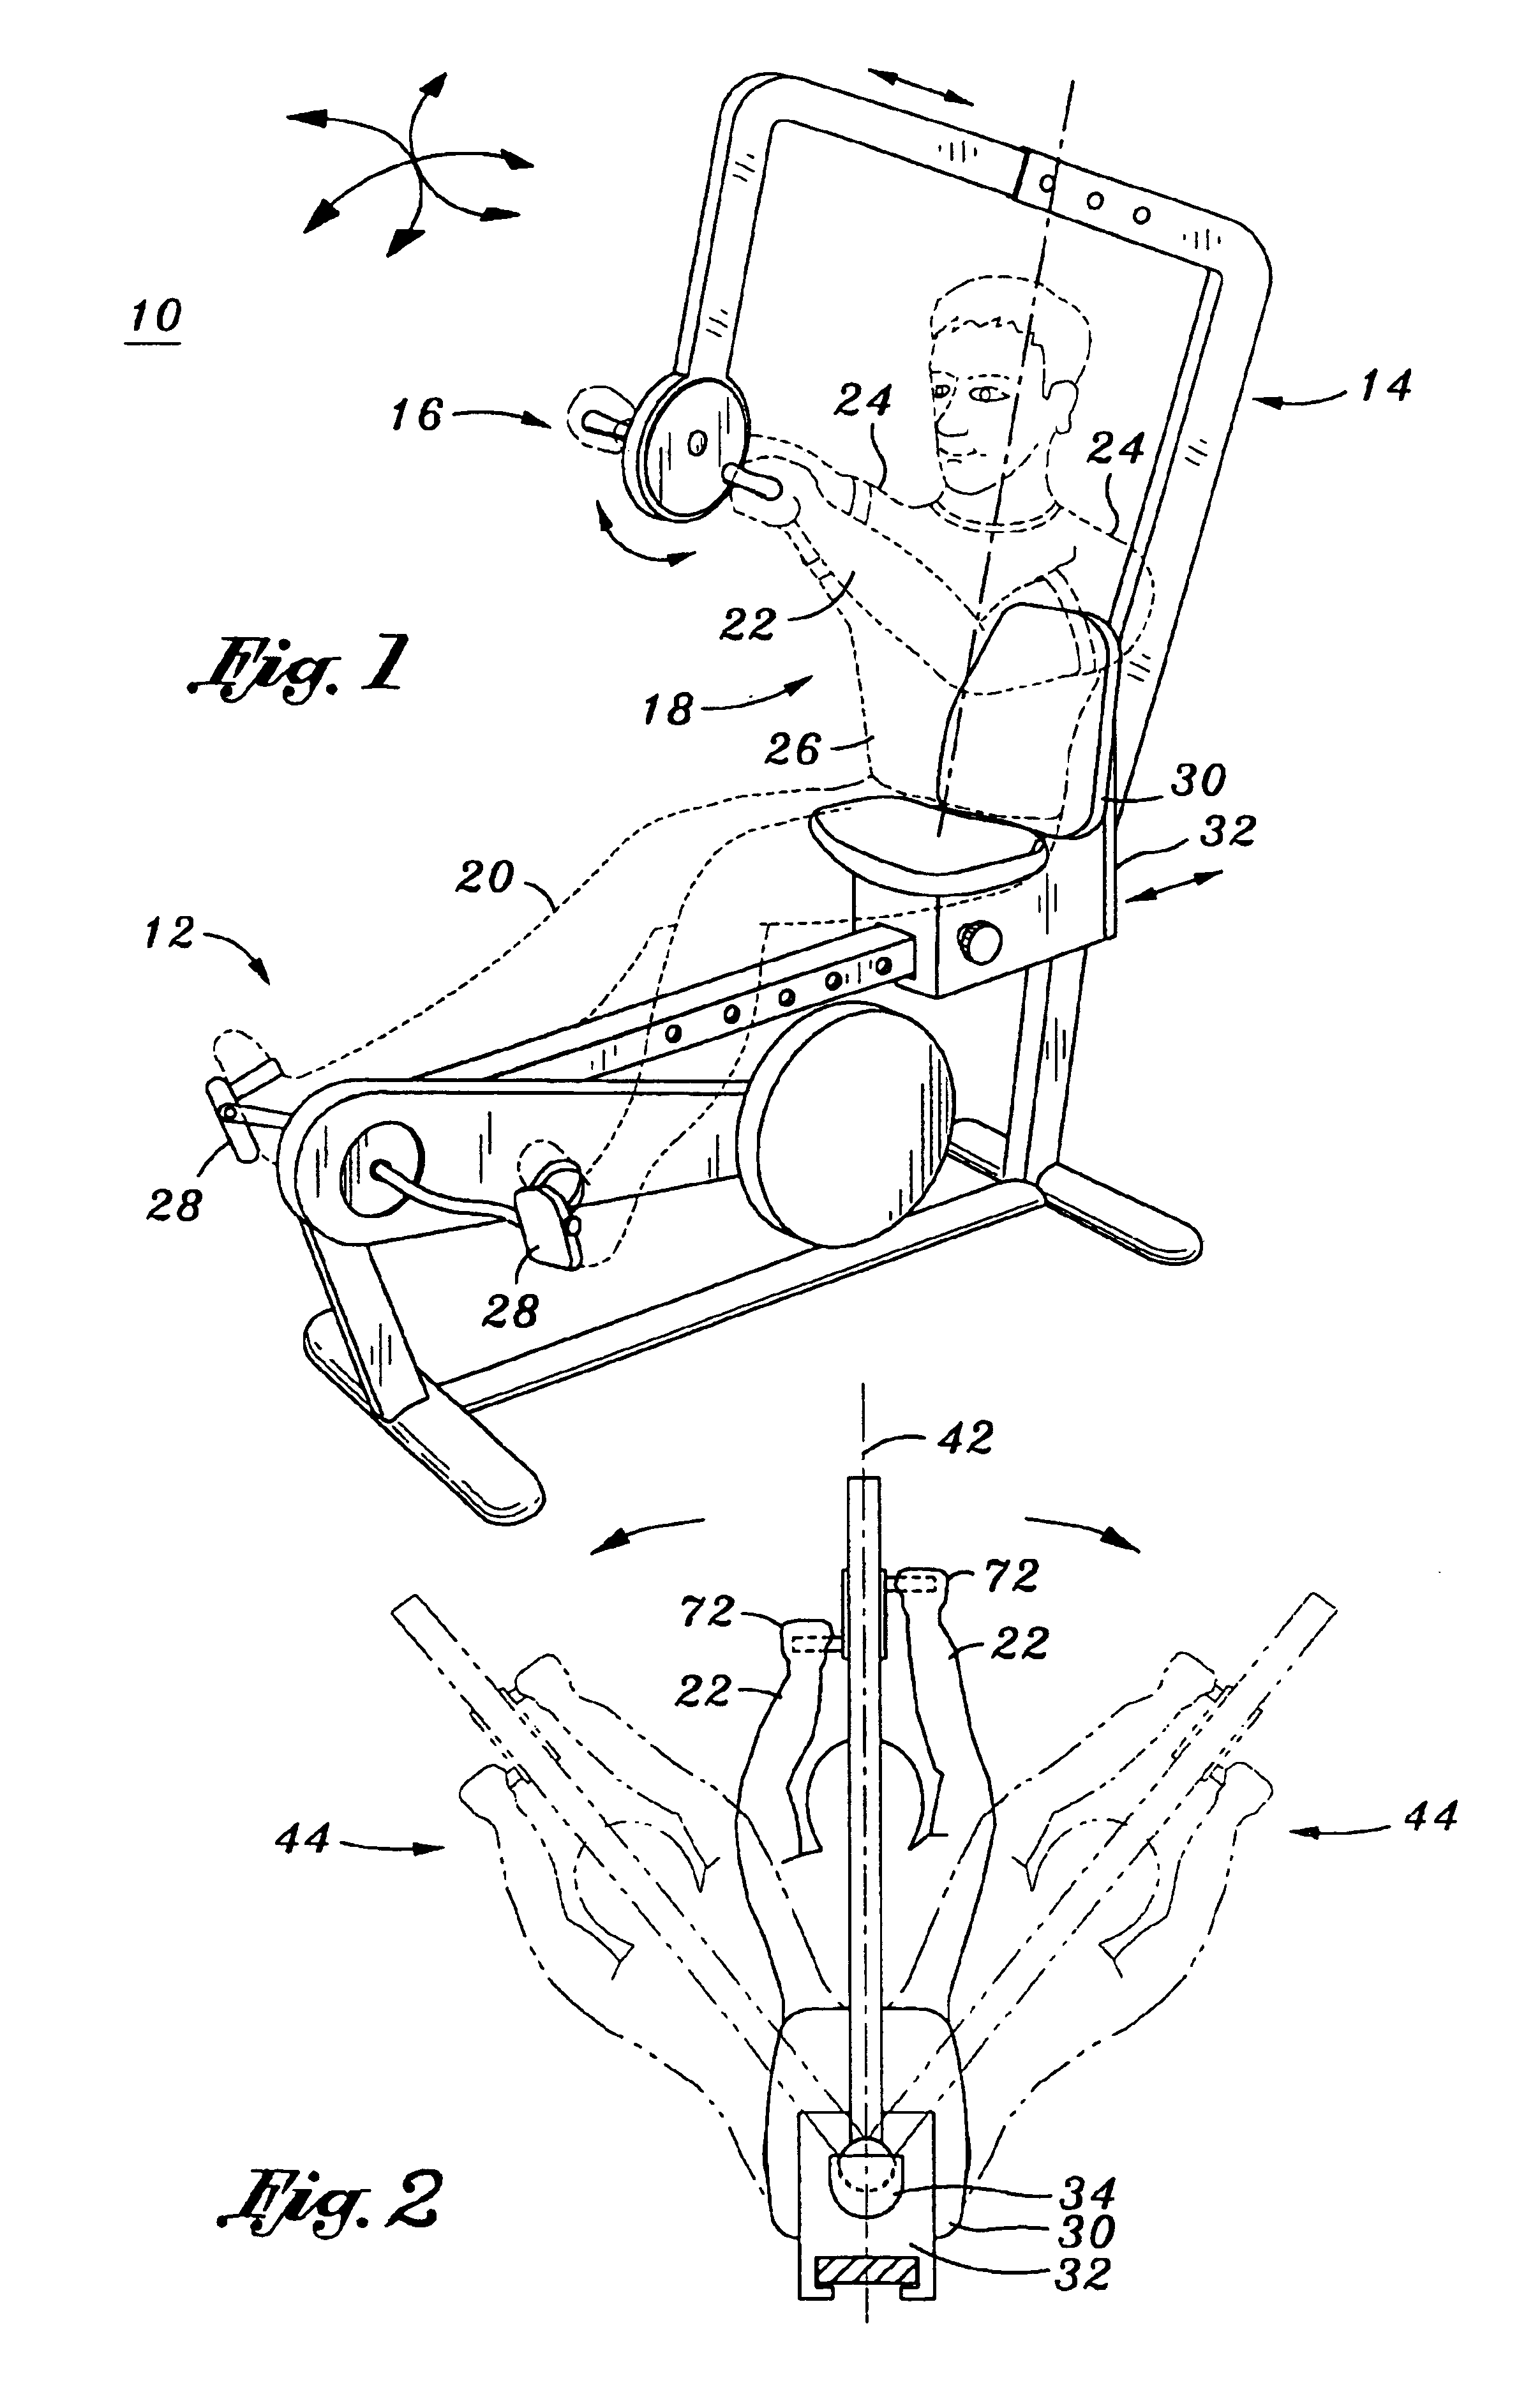 Multi-functional exercise apparatus